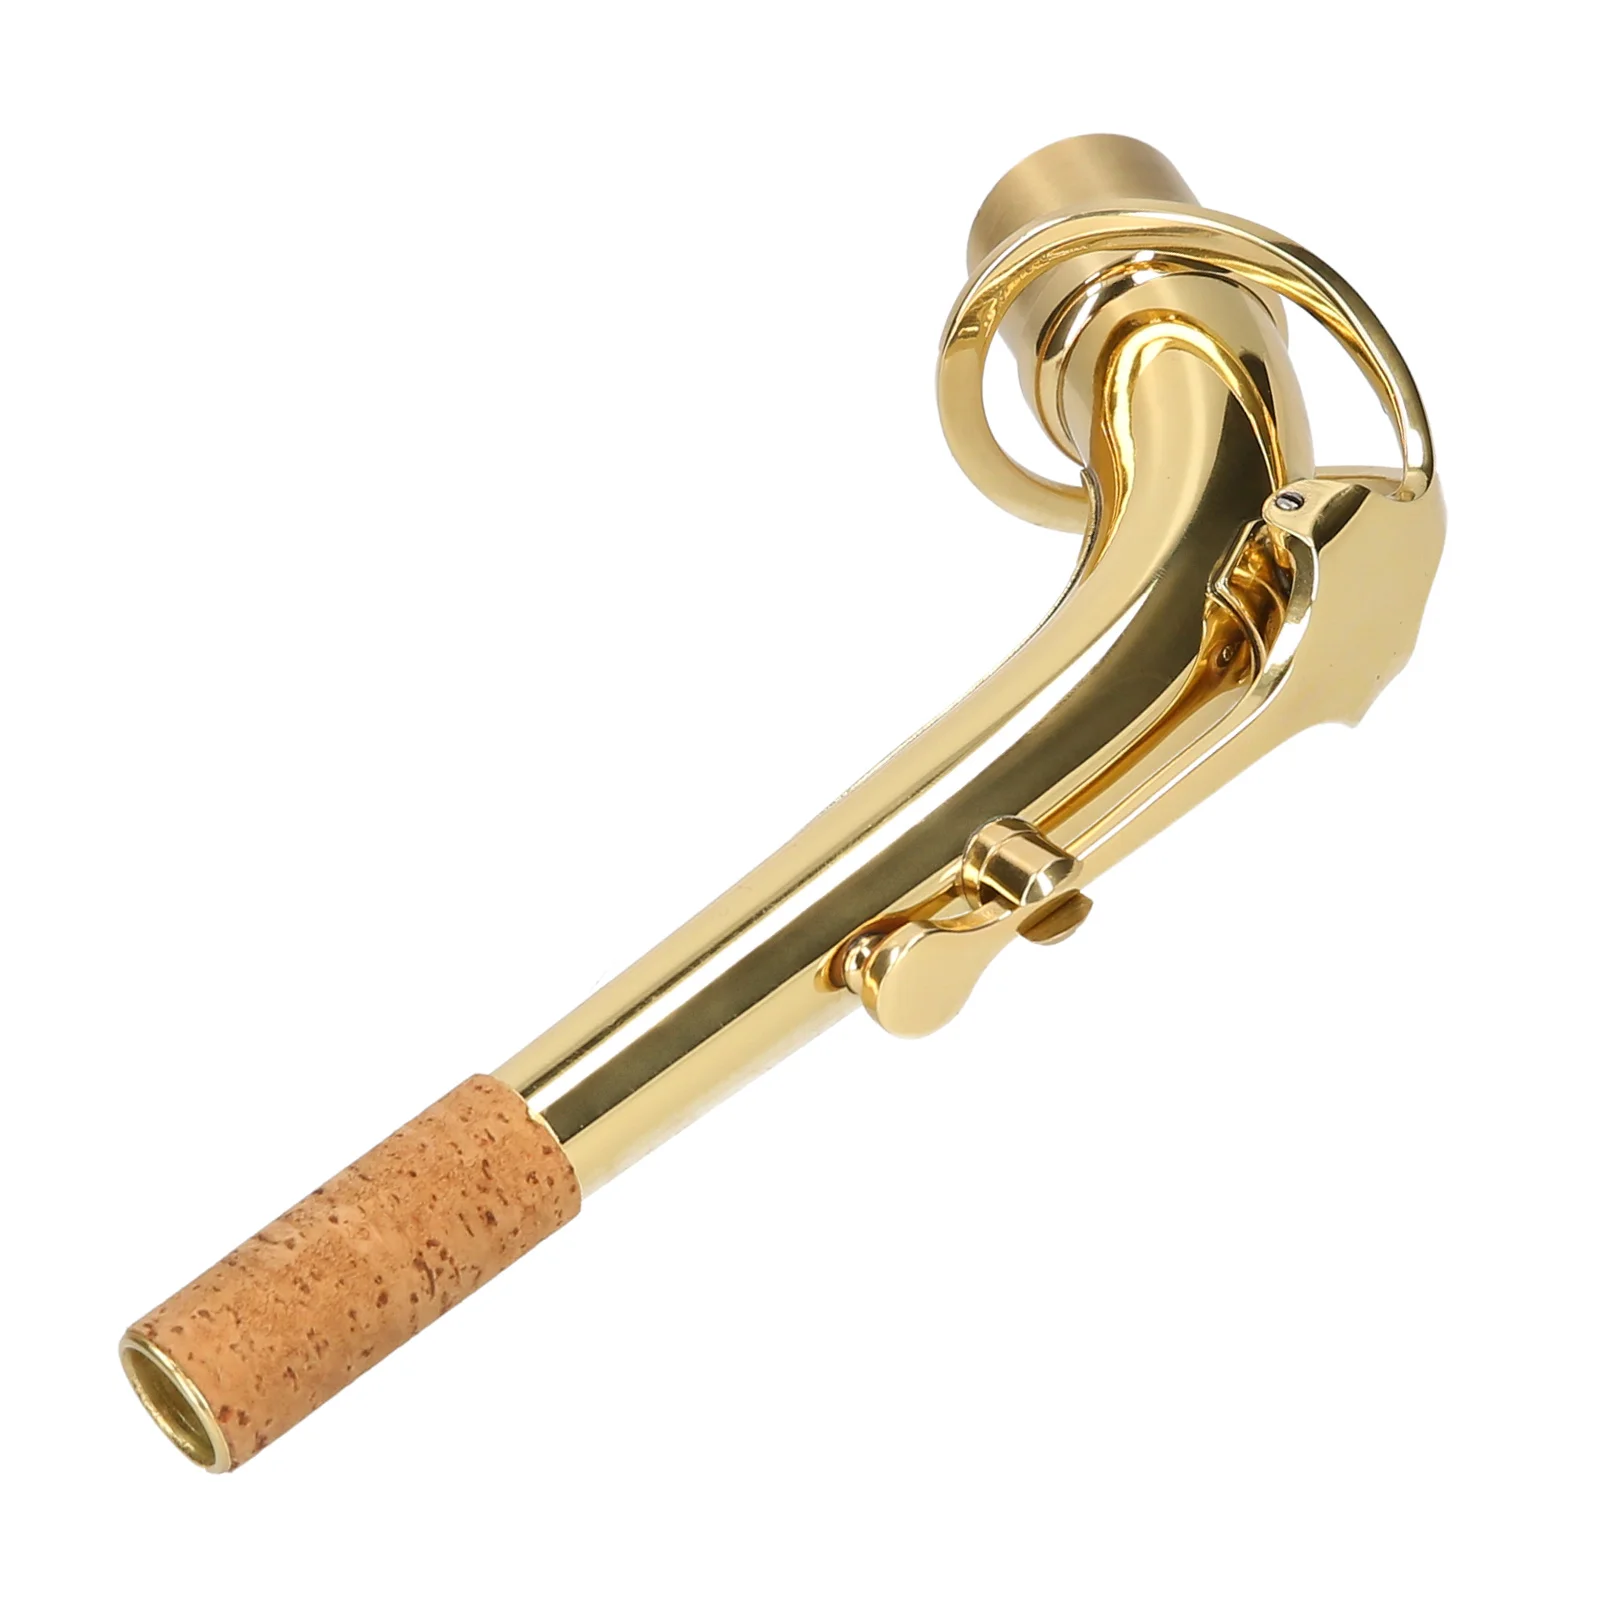 Alto Saxophone Neck Brass Bend Neck Sax Replacement Part Saxophone Woodwind Instrument Accessories